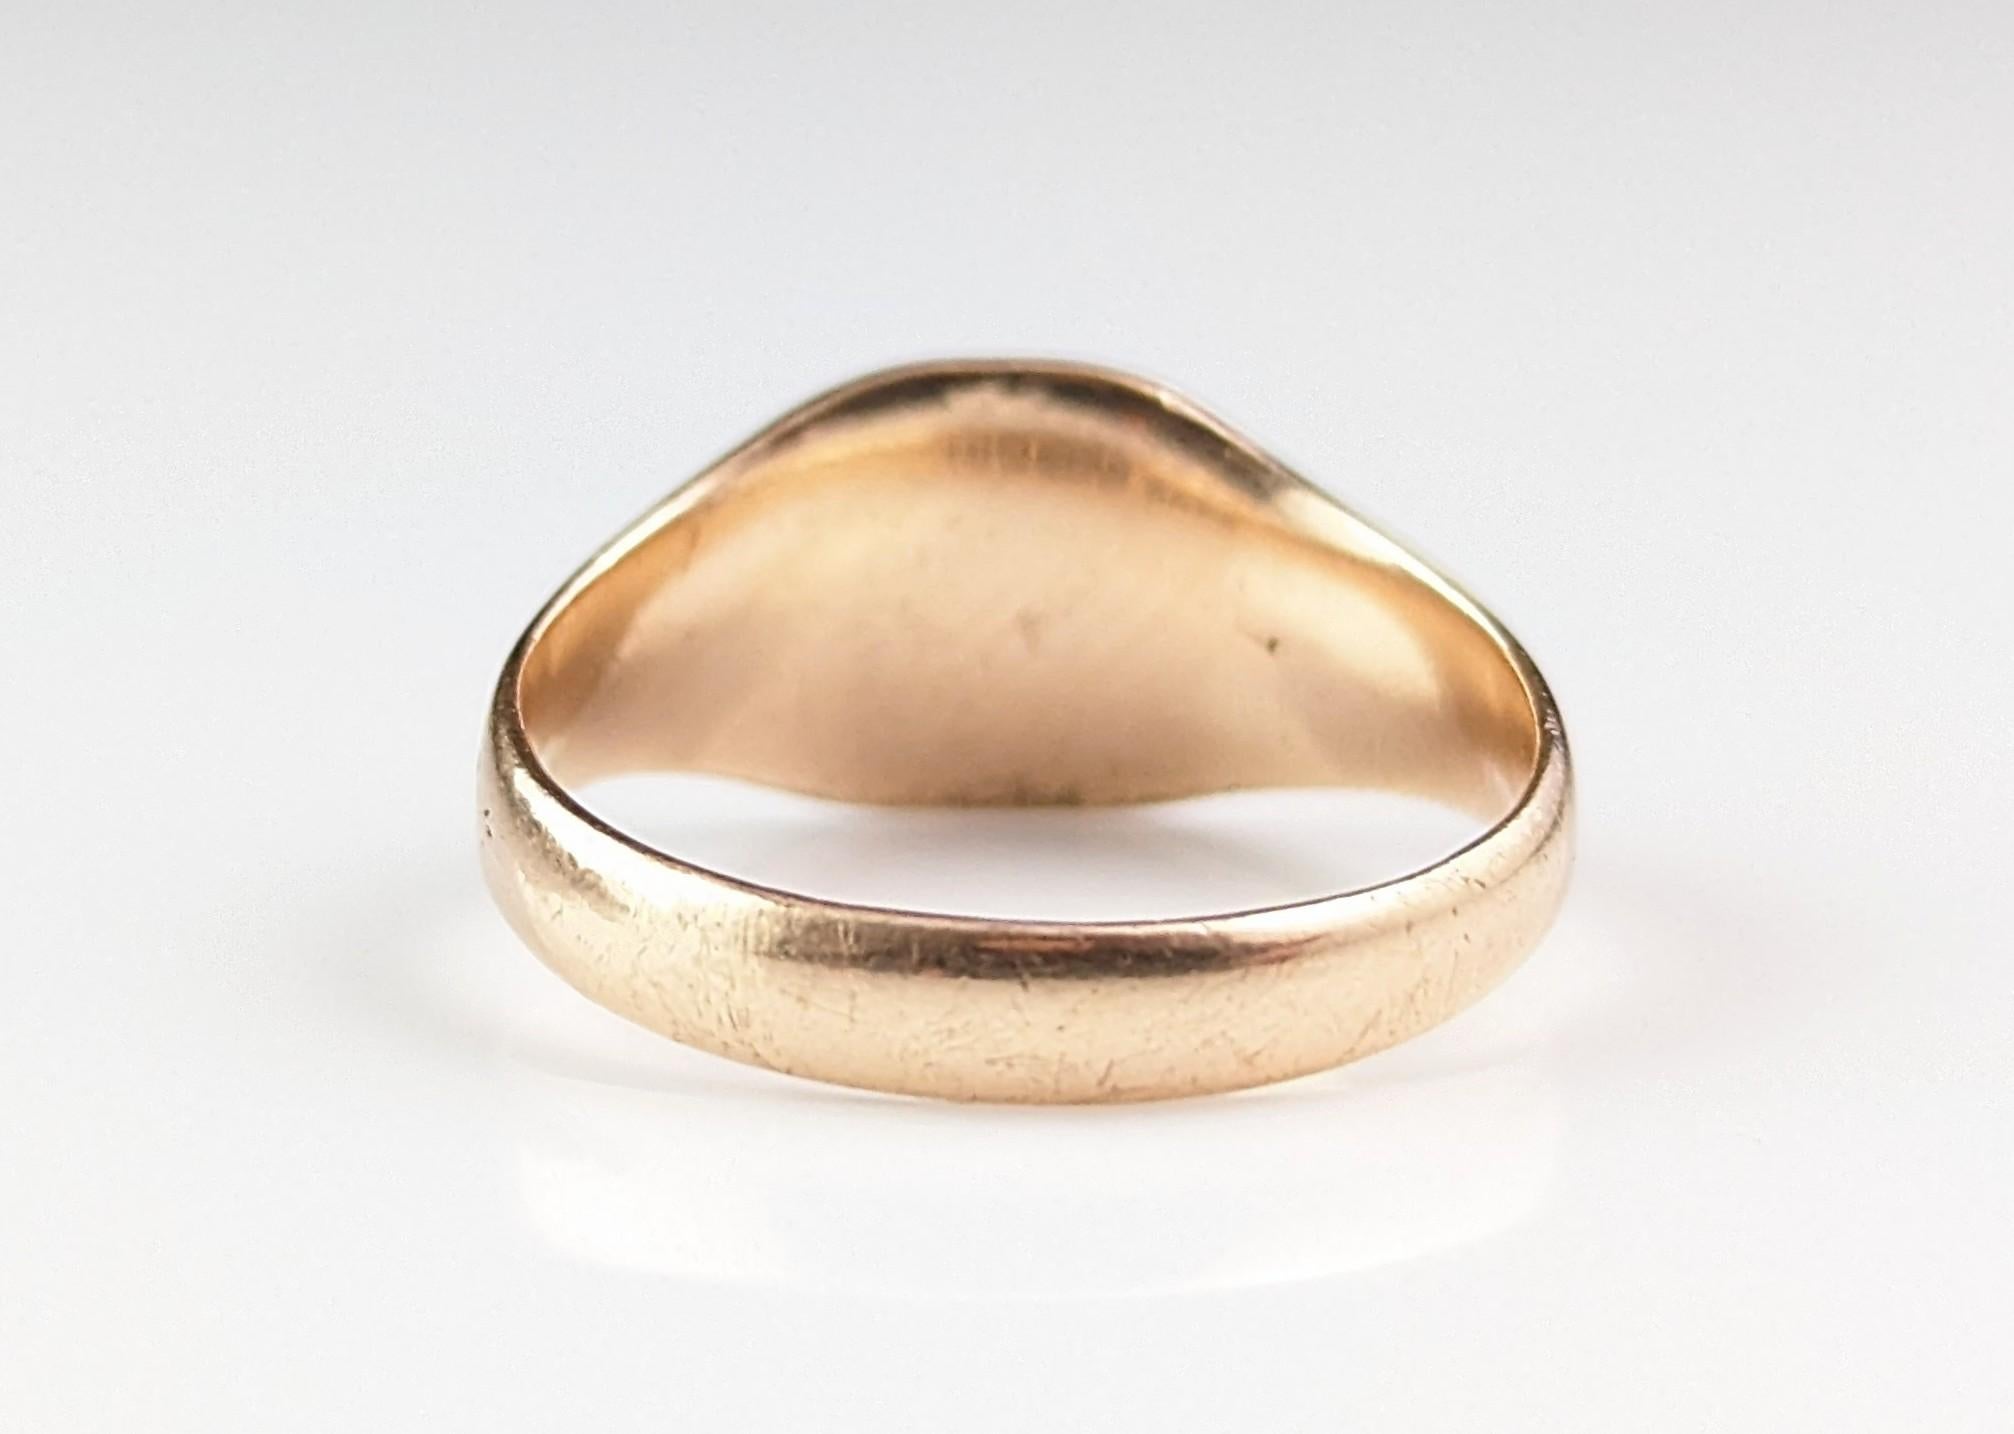 Antique 9k rose gold signet ring, Pinky ring, engraved  7